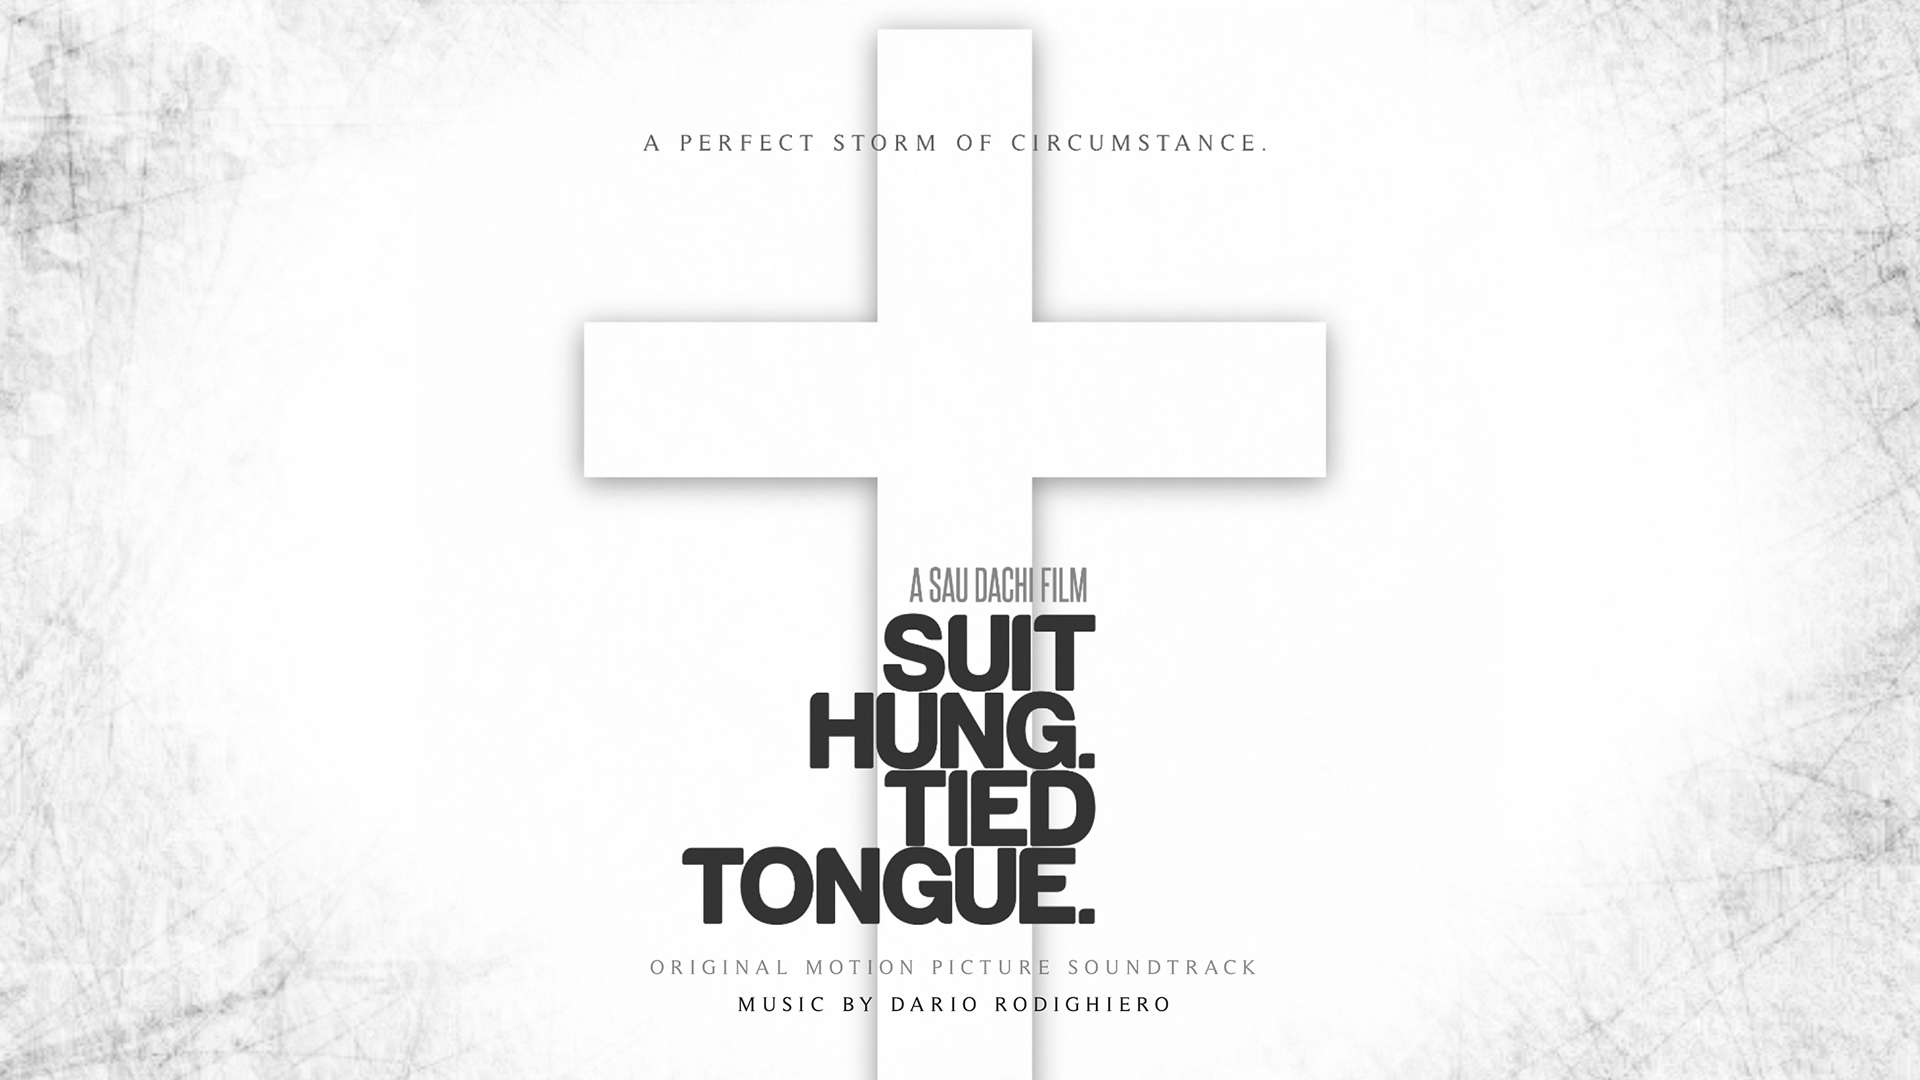 Harmonising Chaos: Dario Rodighiero Spellbinding Soundtrack for ‘Suit Hung. Tied Tongue’